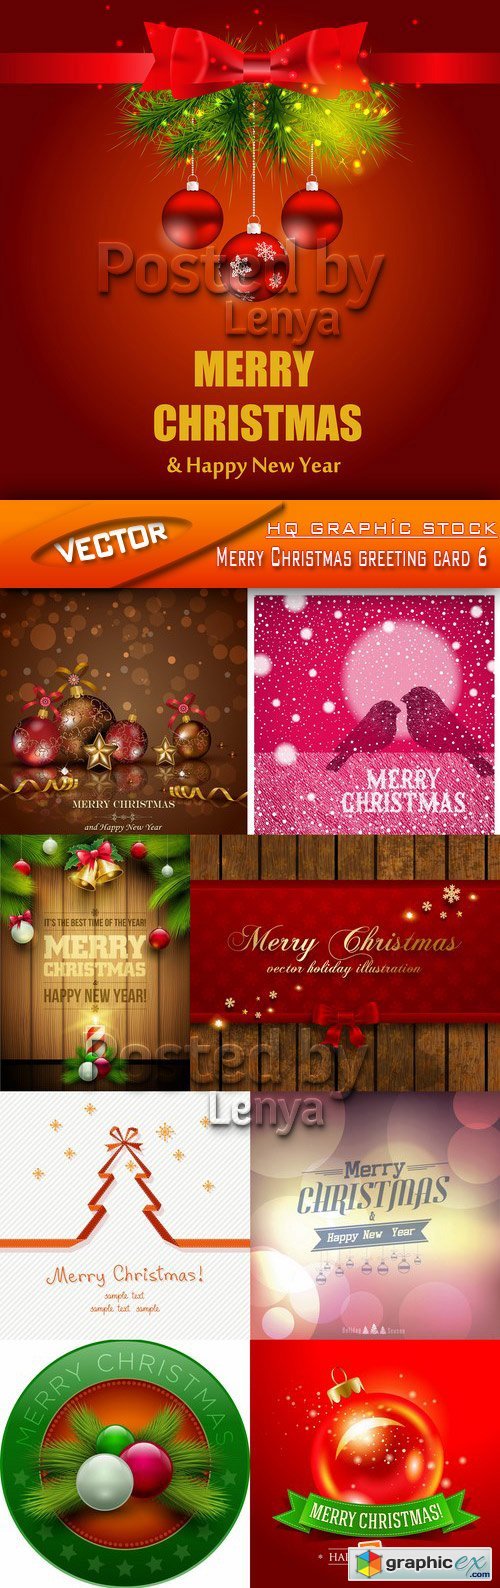 Stock Vector - Merry Christmas greeting card 6